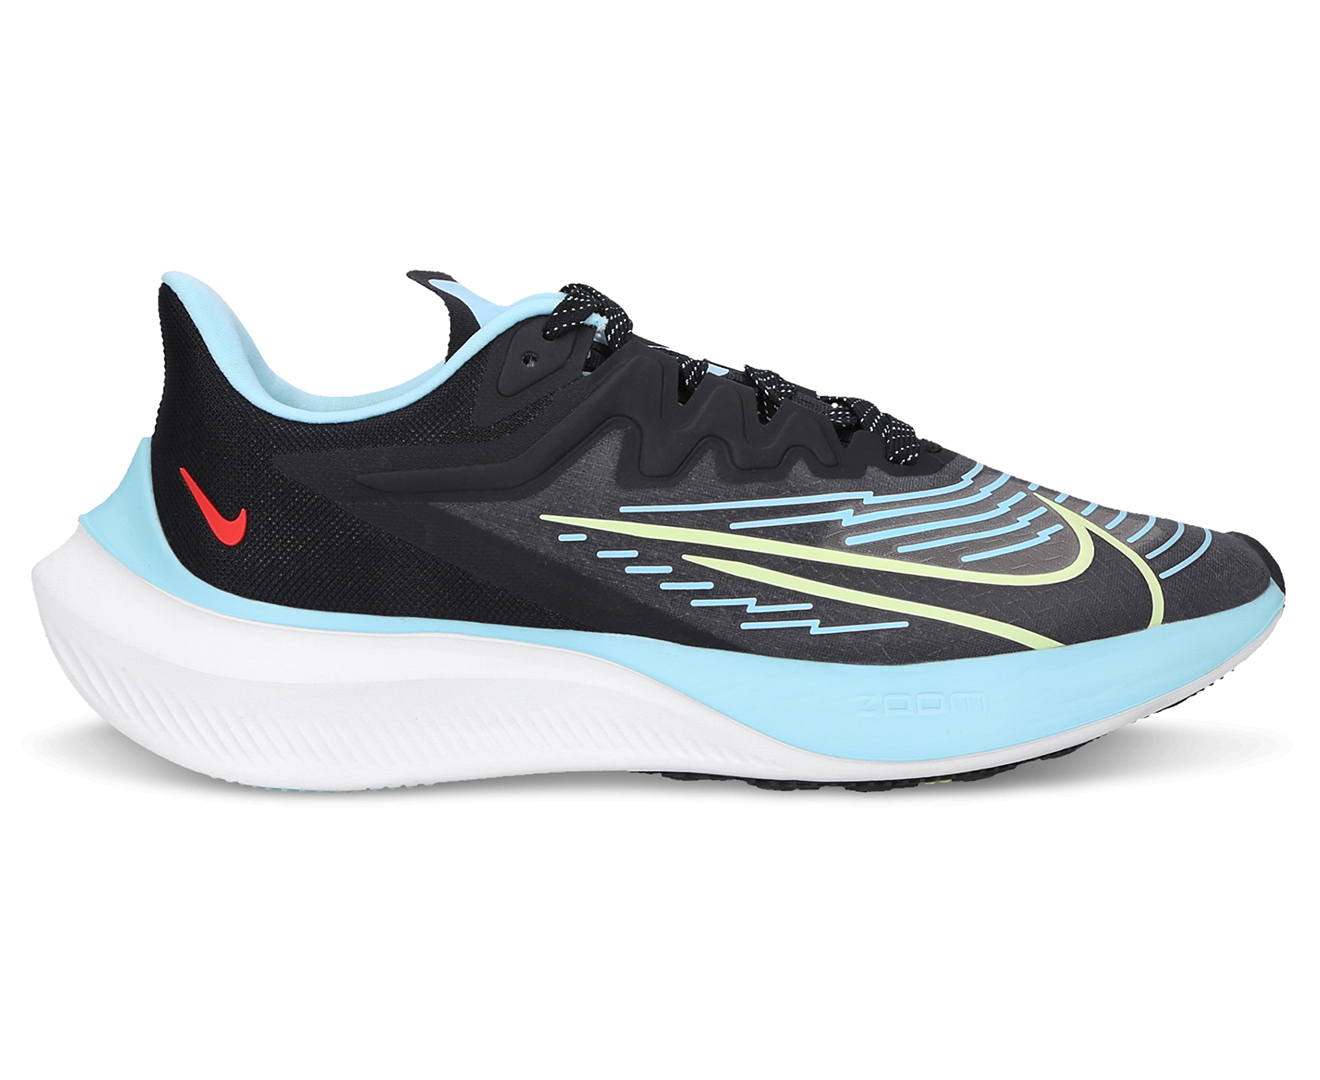 Nike Women's Zoom Gravity 2 Running Shoes - Black/Barely Volt Glacier Ice | Catch.com.au